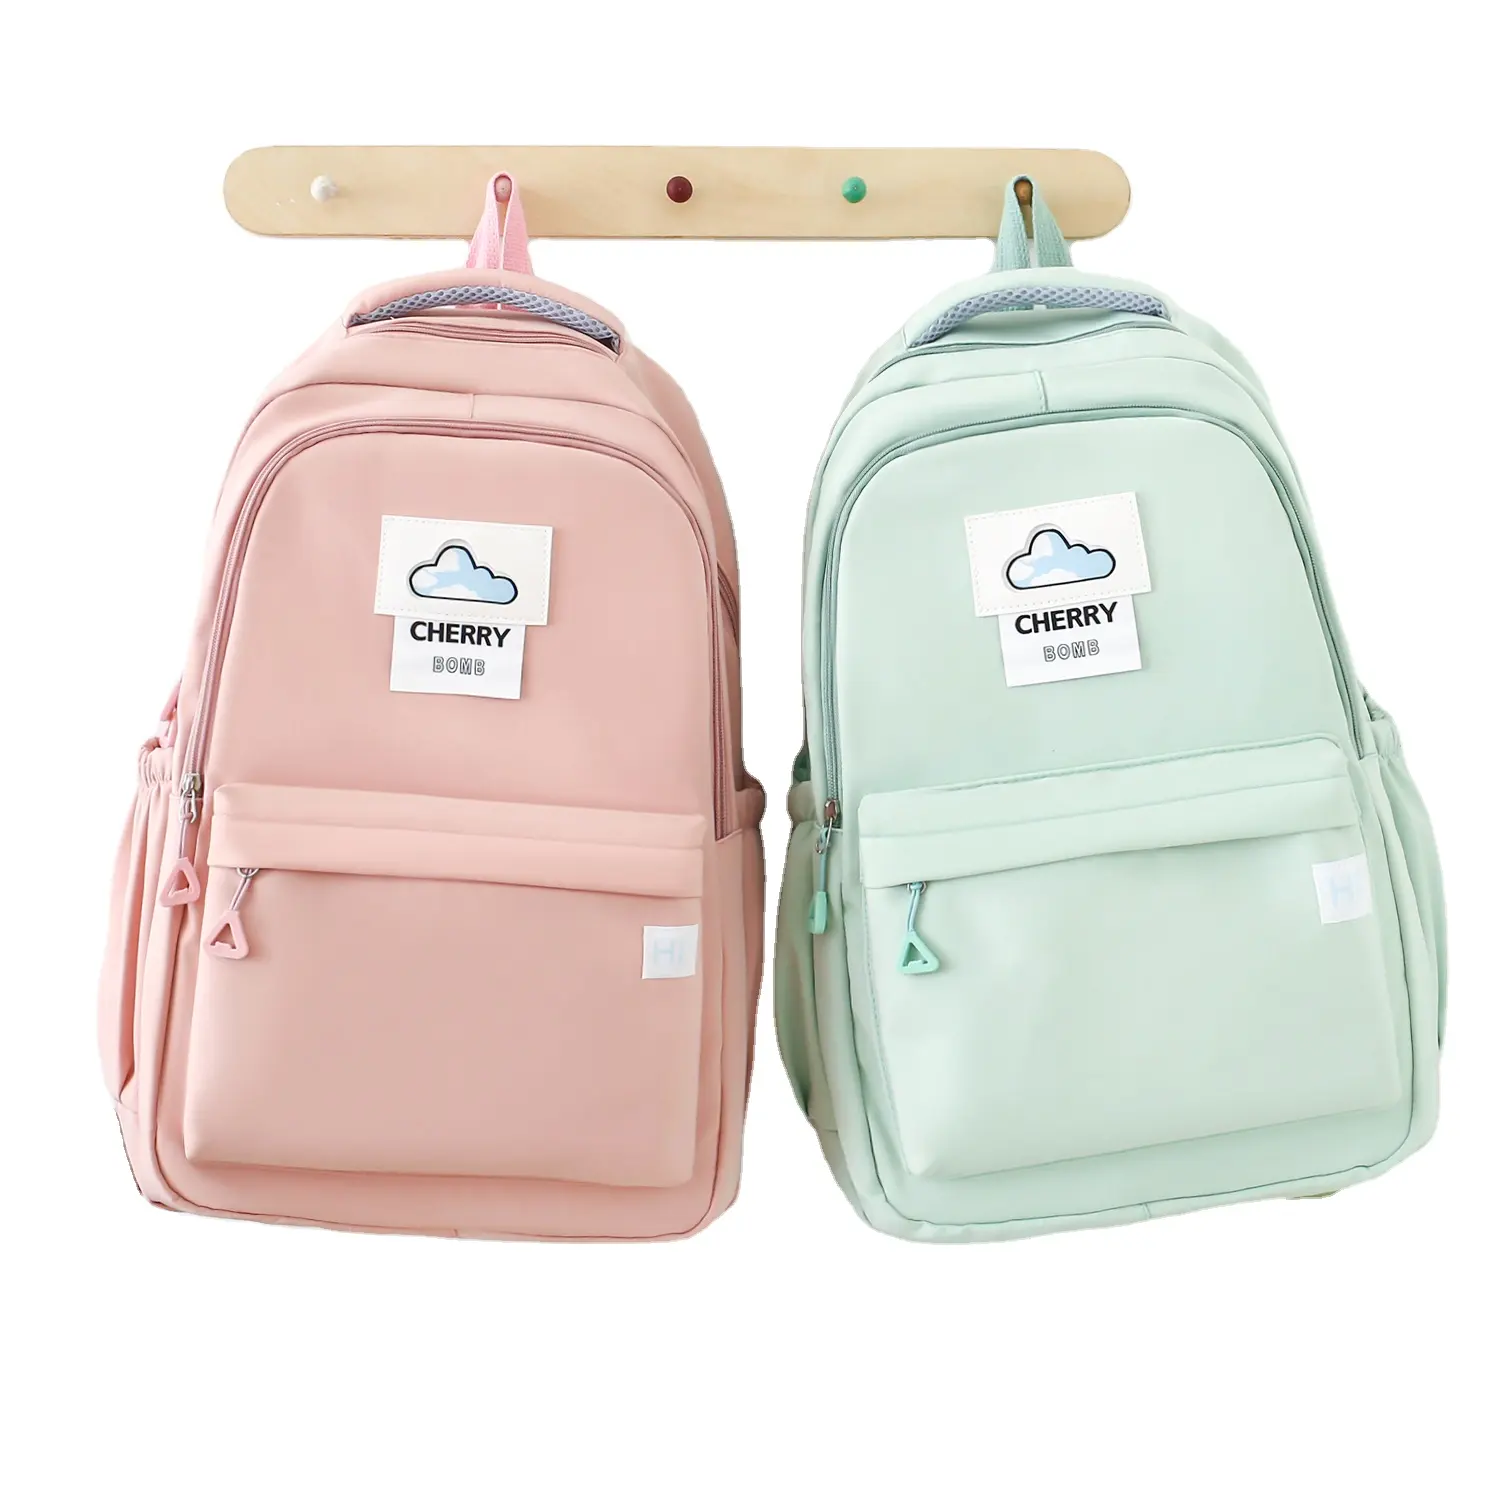 School bags student backpack leisure Large capacity Junior backpacks light travel bags unisex backpack Multifunctional